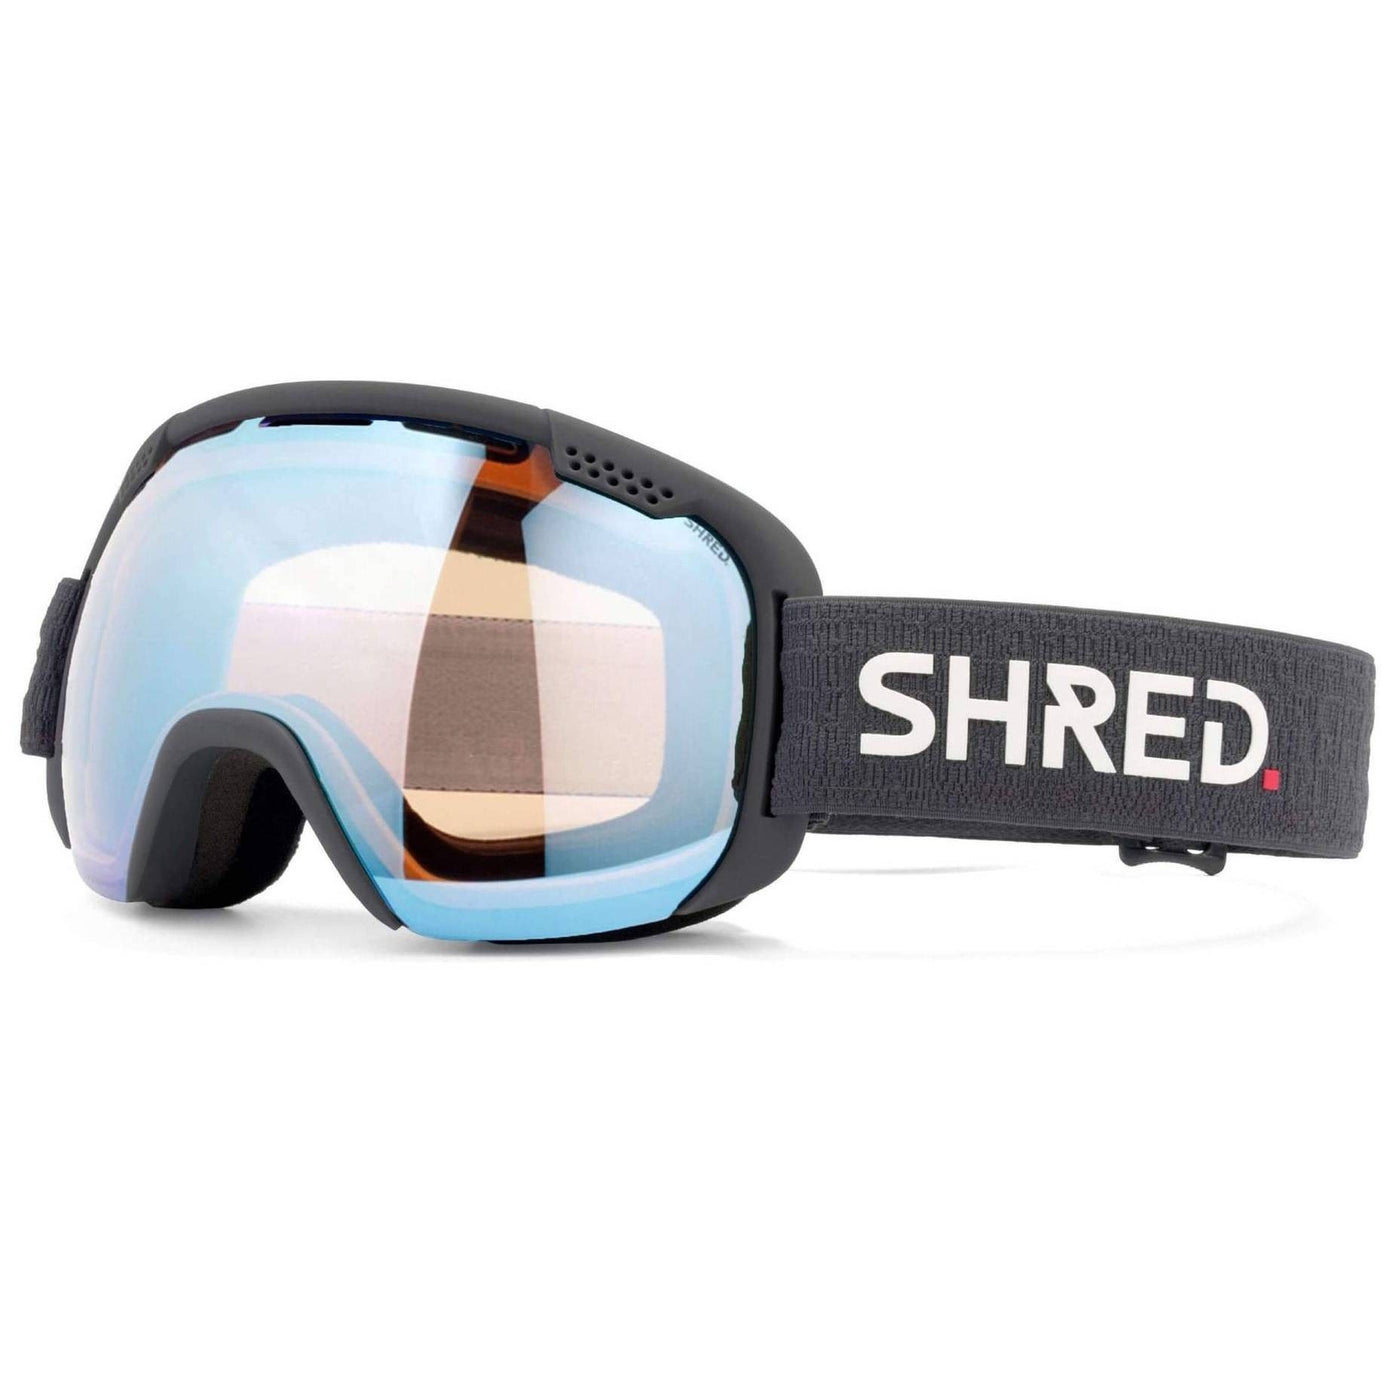 Shred Smartefy - CBL SKY